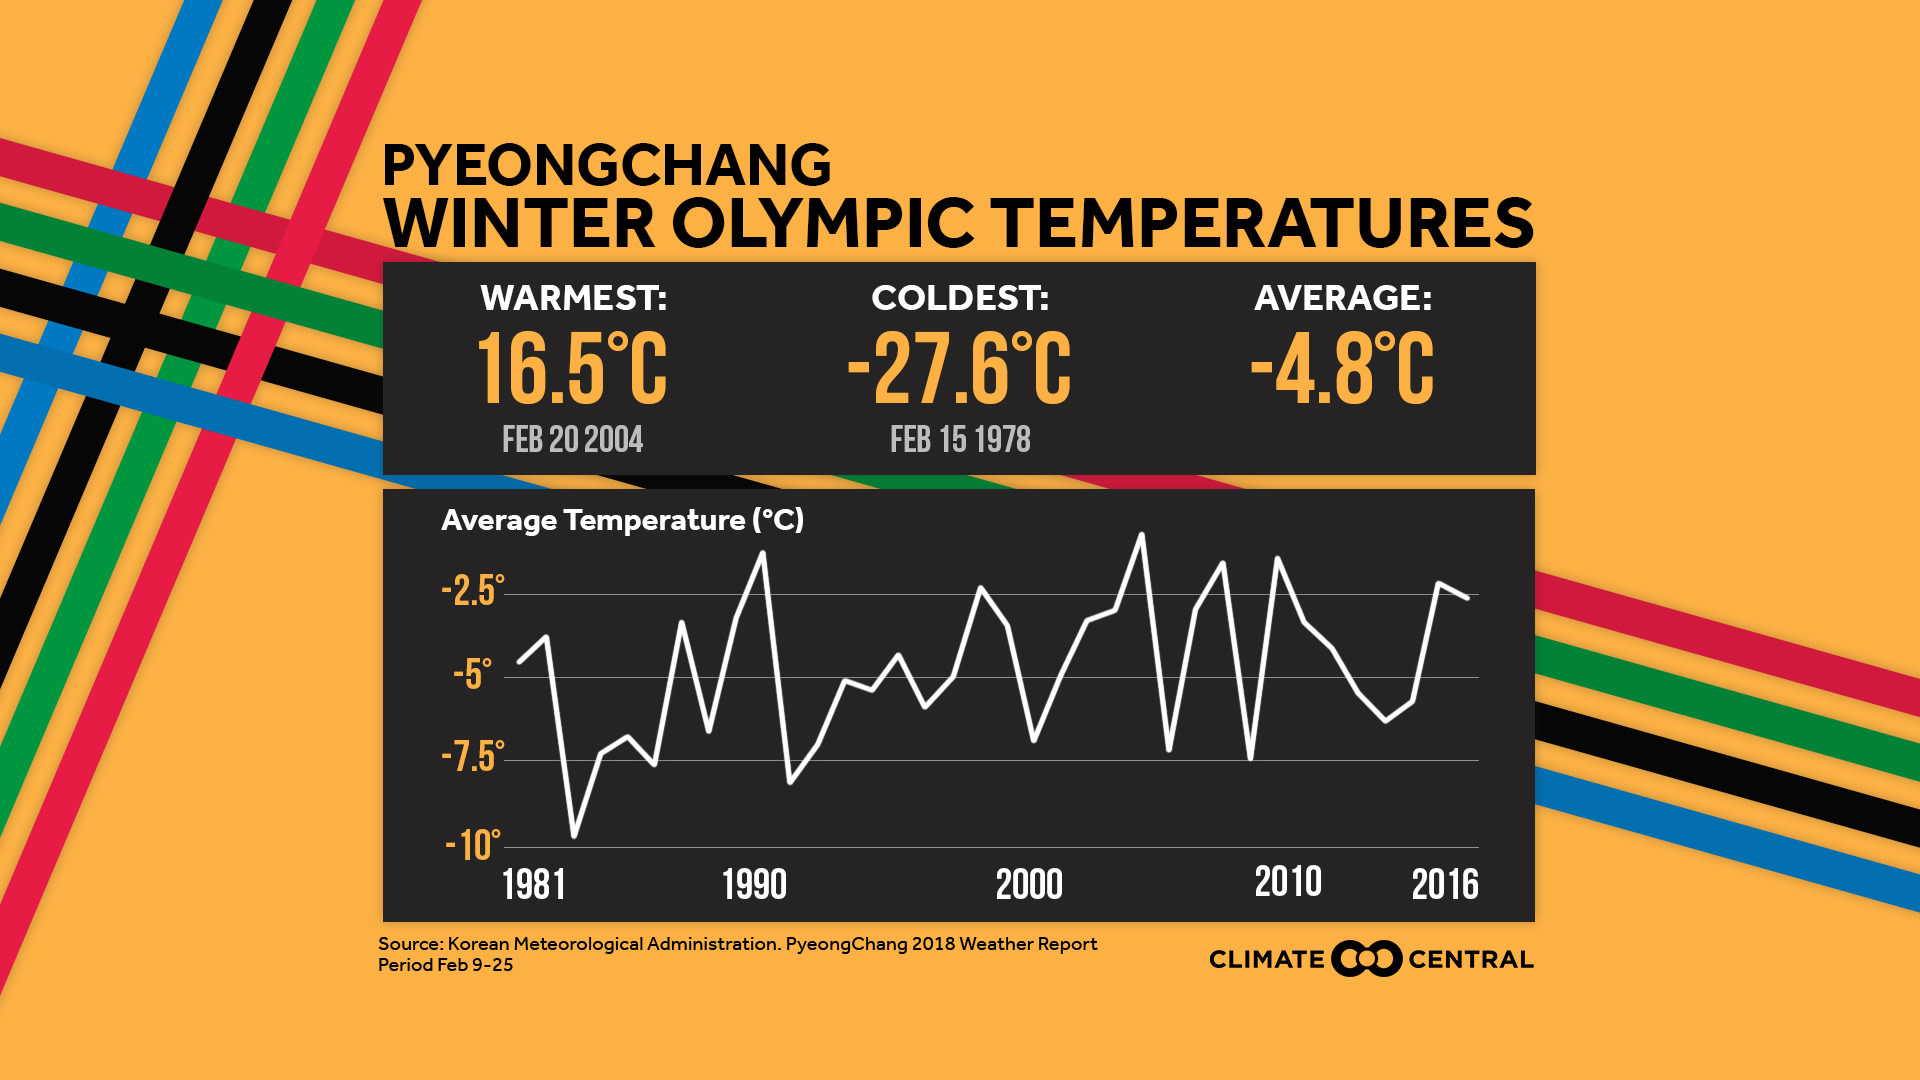 Set 2 - Winter Olympics: PyeongChang 2018